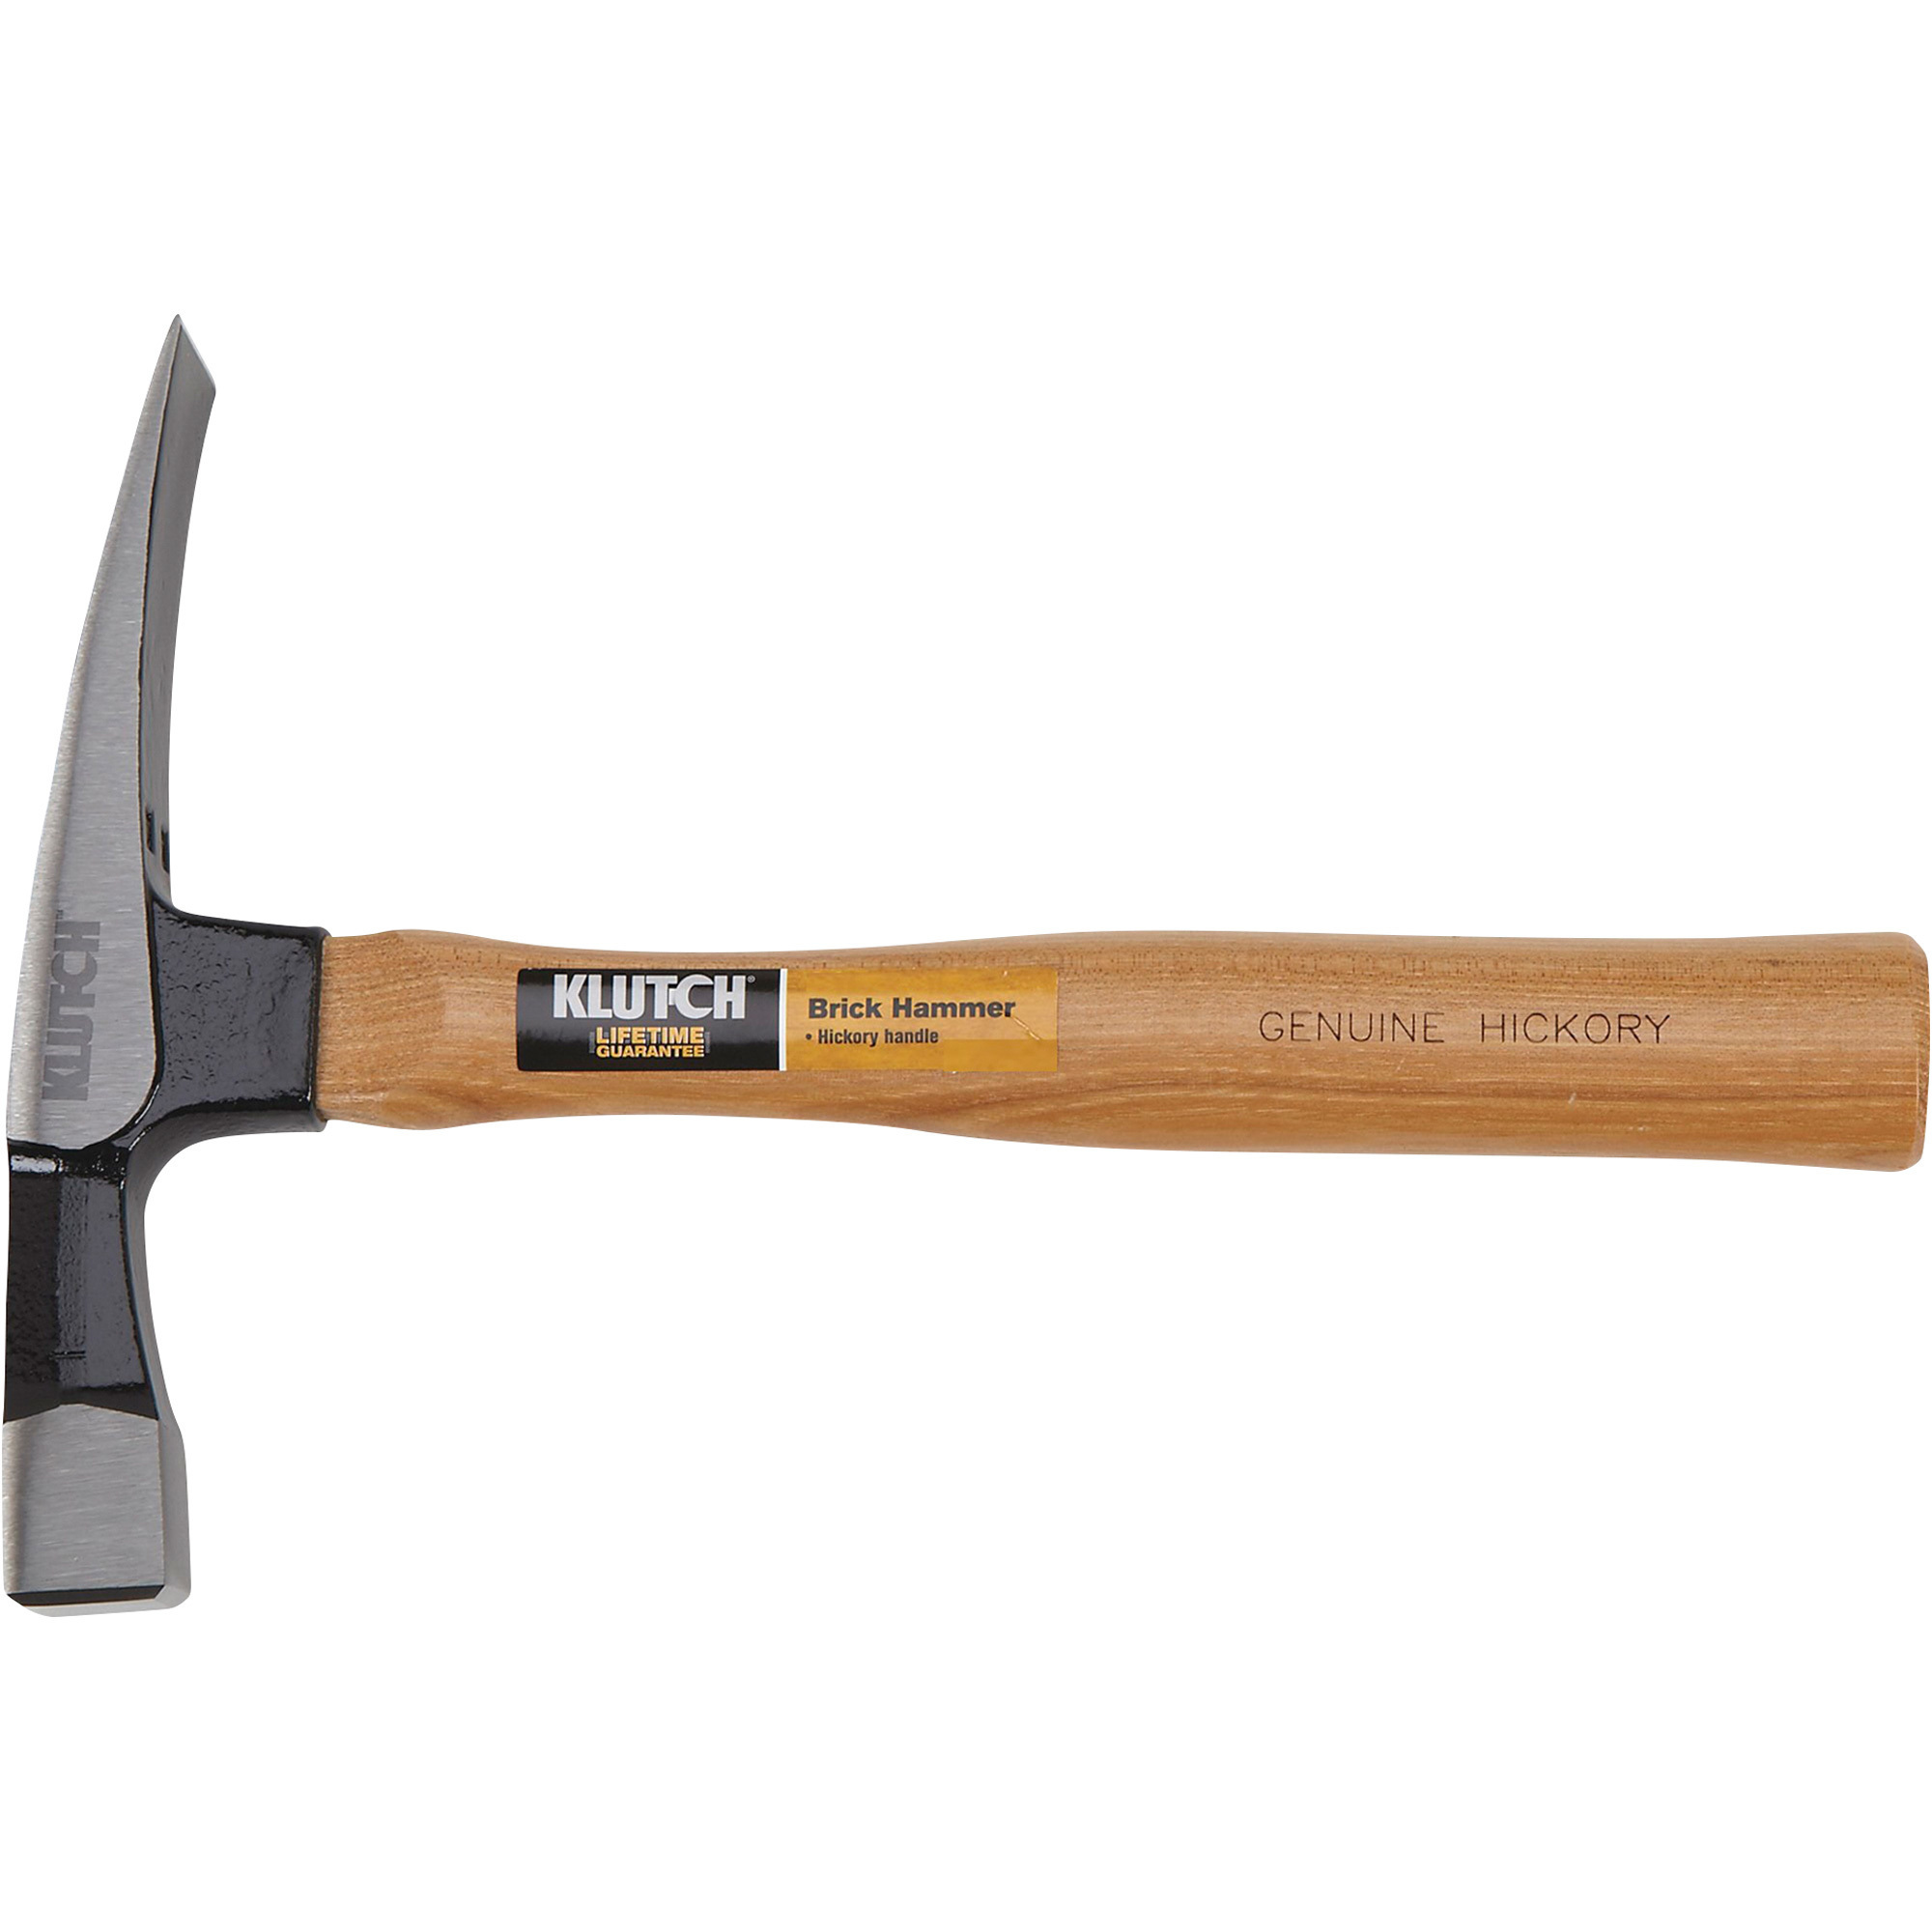 Klutch Brick Hammer, 16-Oz., Model 90070